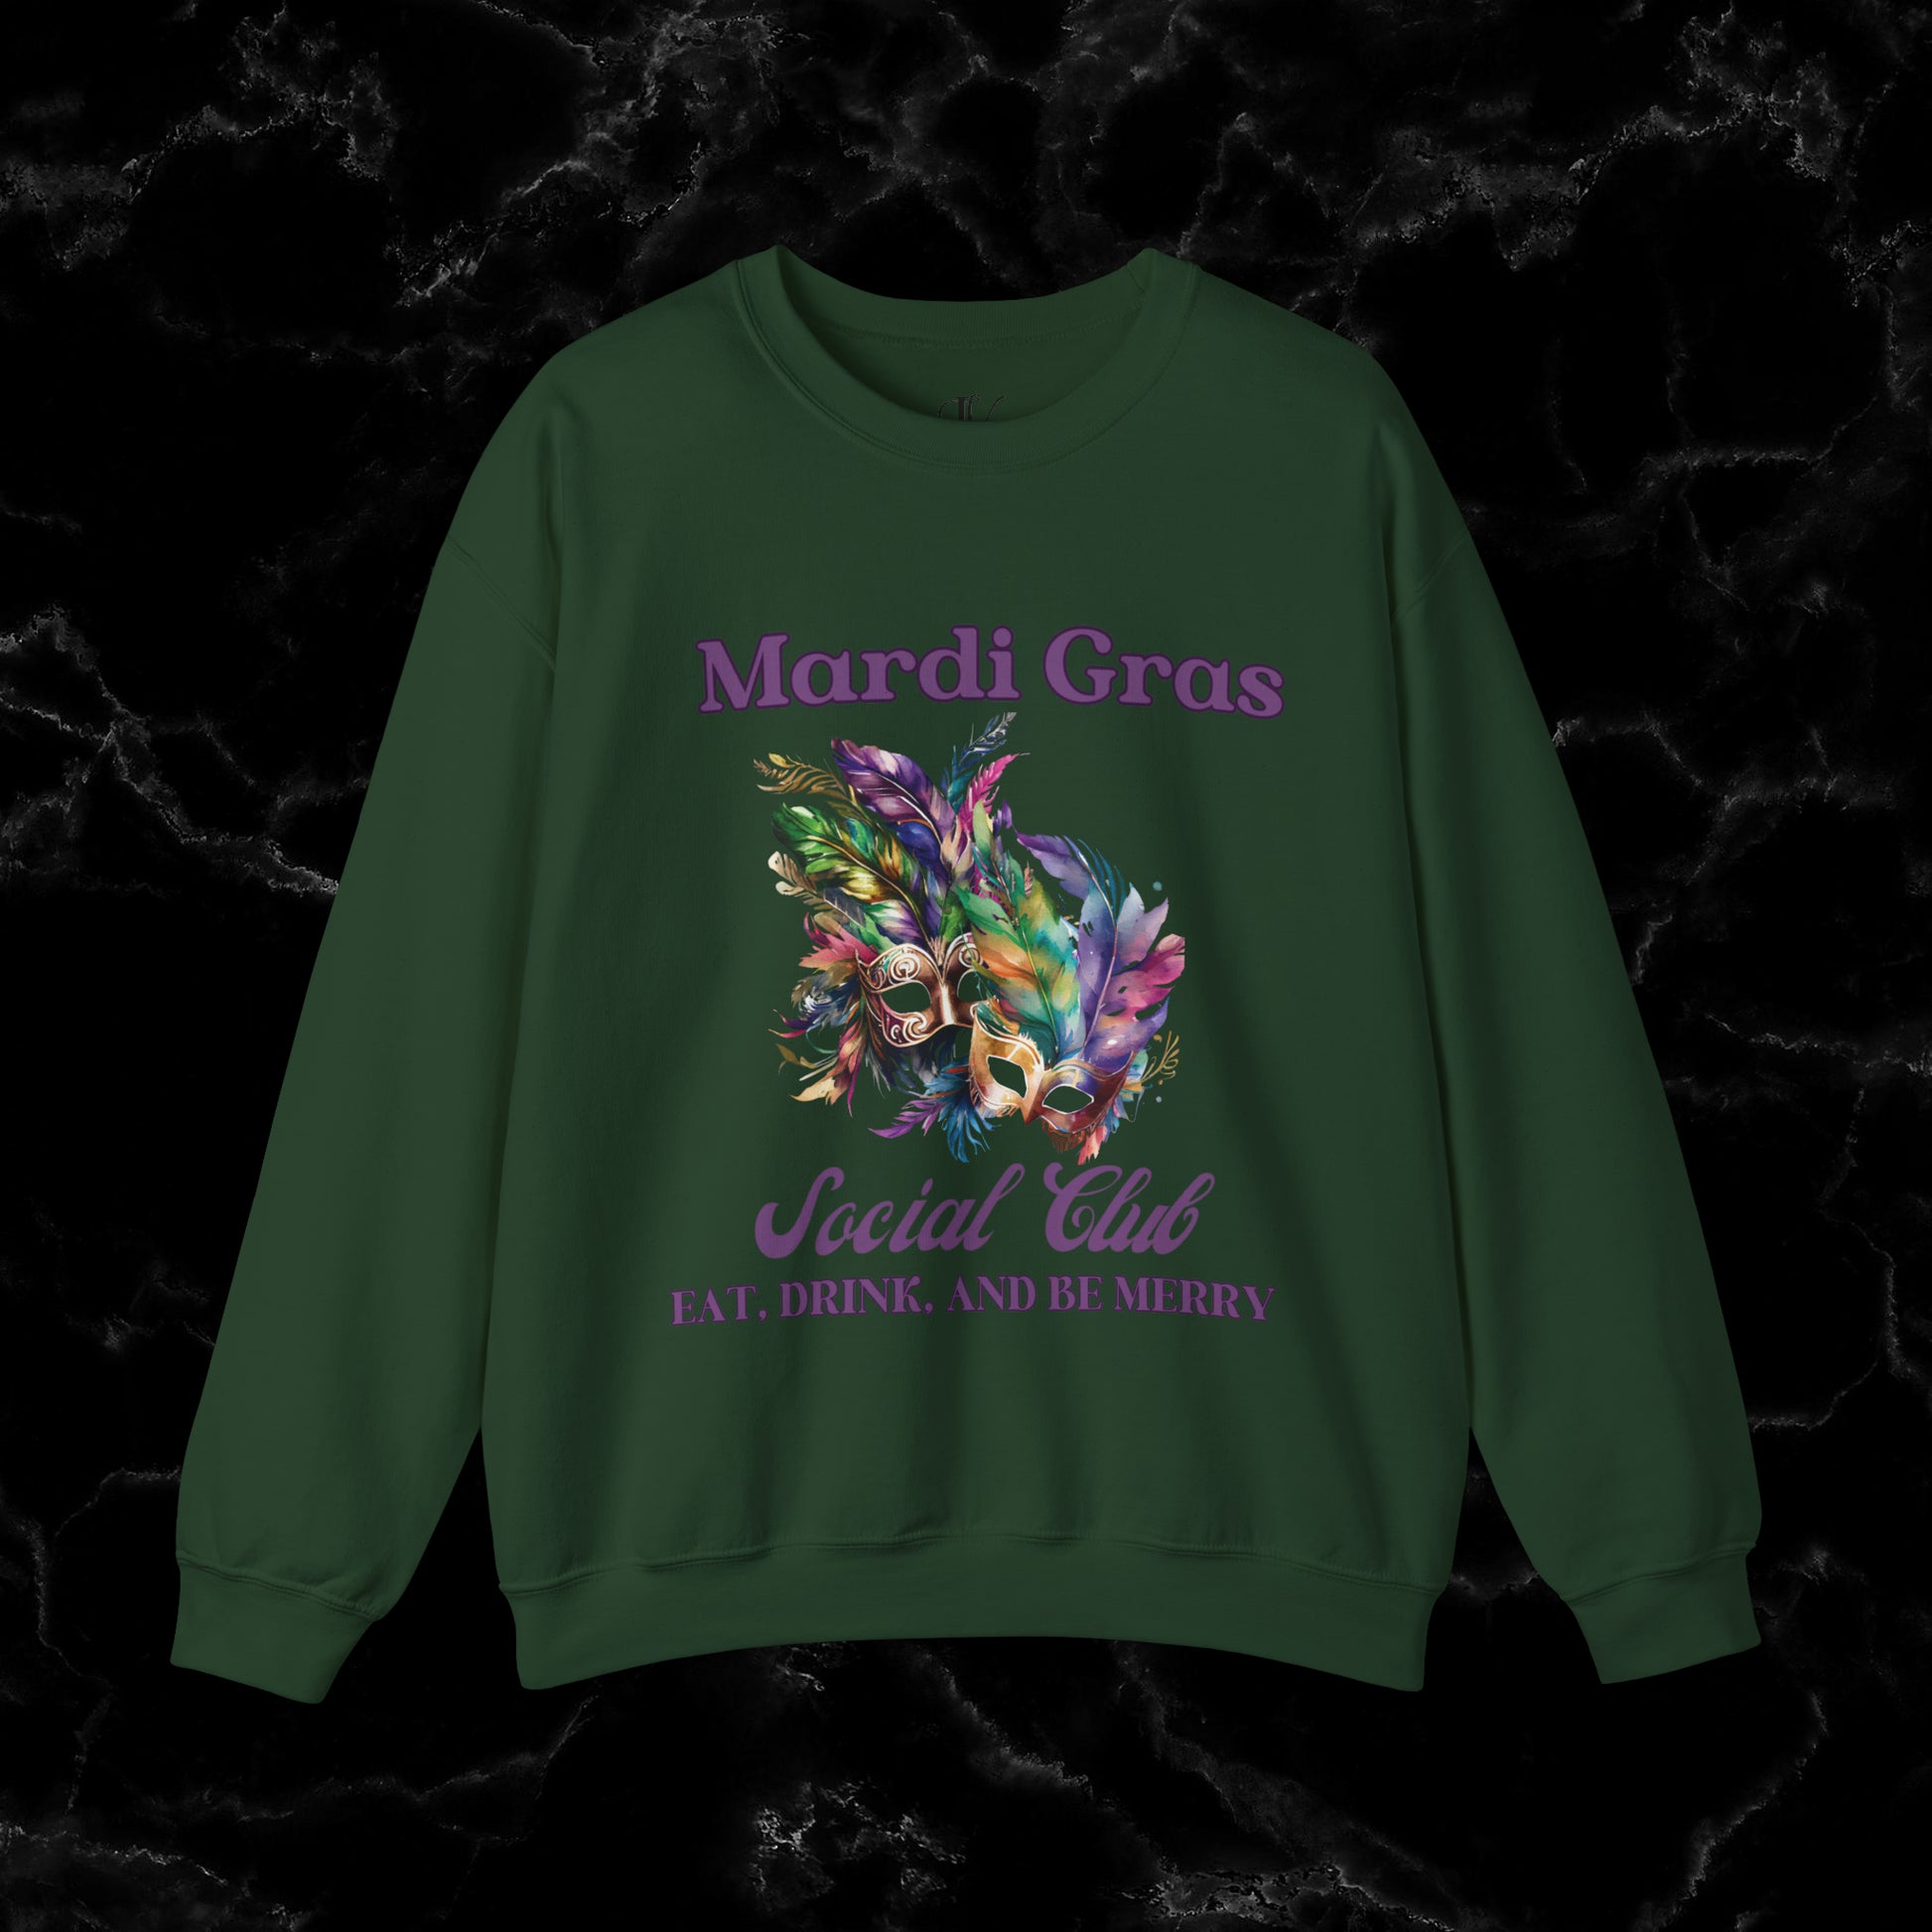 Mardi Gras Sweatshirt Women - NOLA Luxury Bachelorette Sweater, Unique Fat Tuesday Shirt, Louisiana Girls Trip Sweater, Mardi Gras Social Club Chic Sweatshirt S Forest Green 